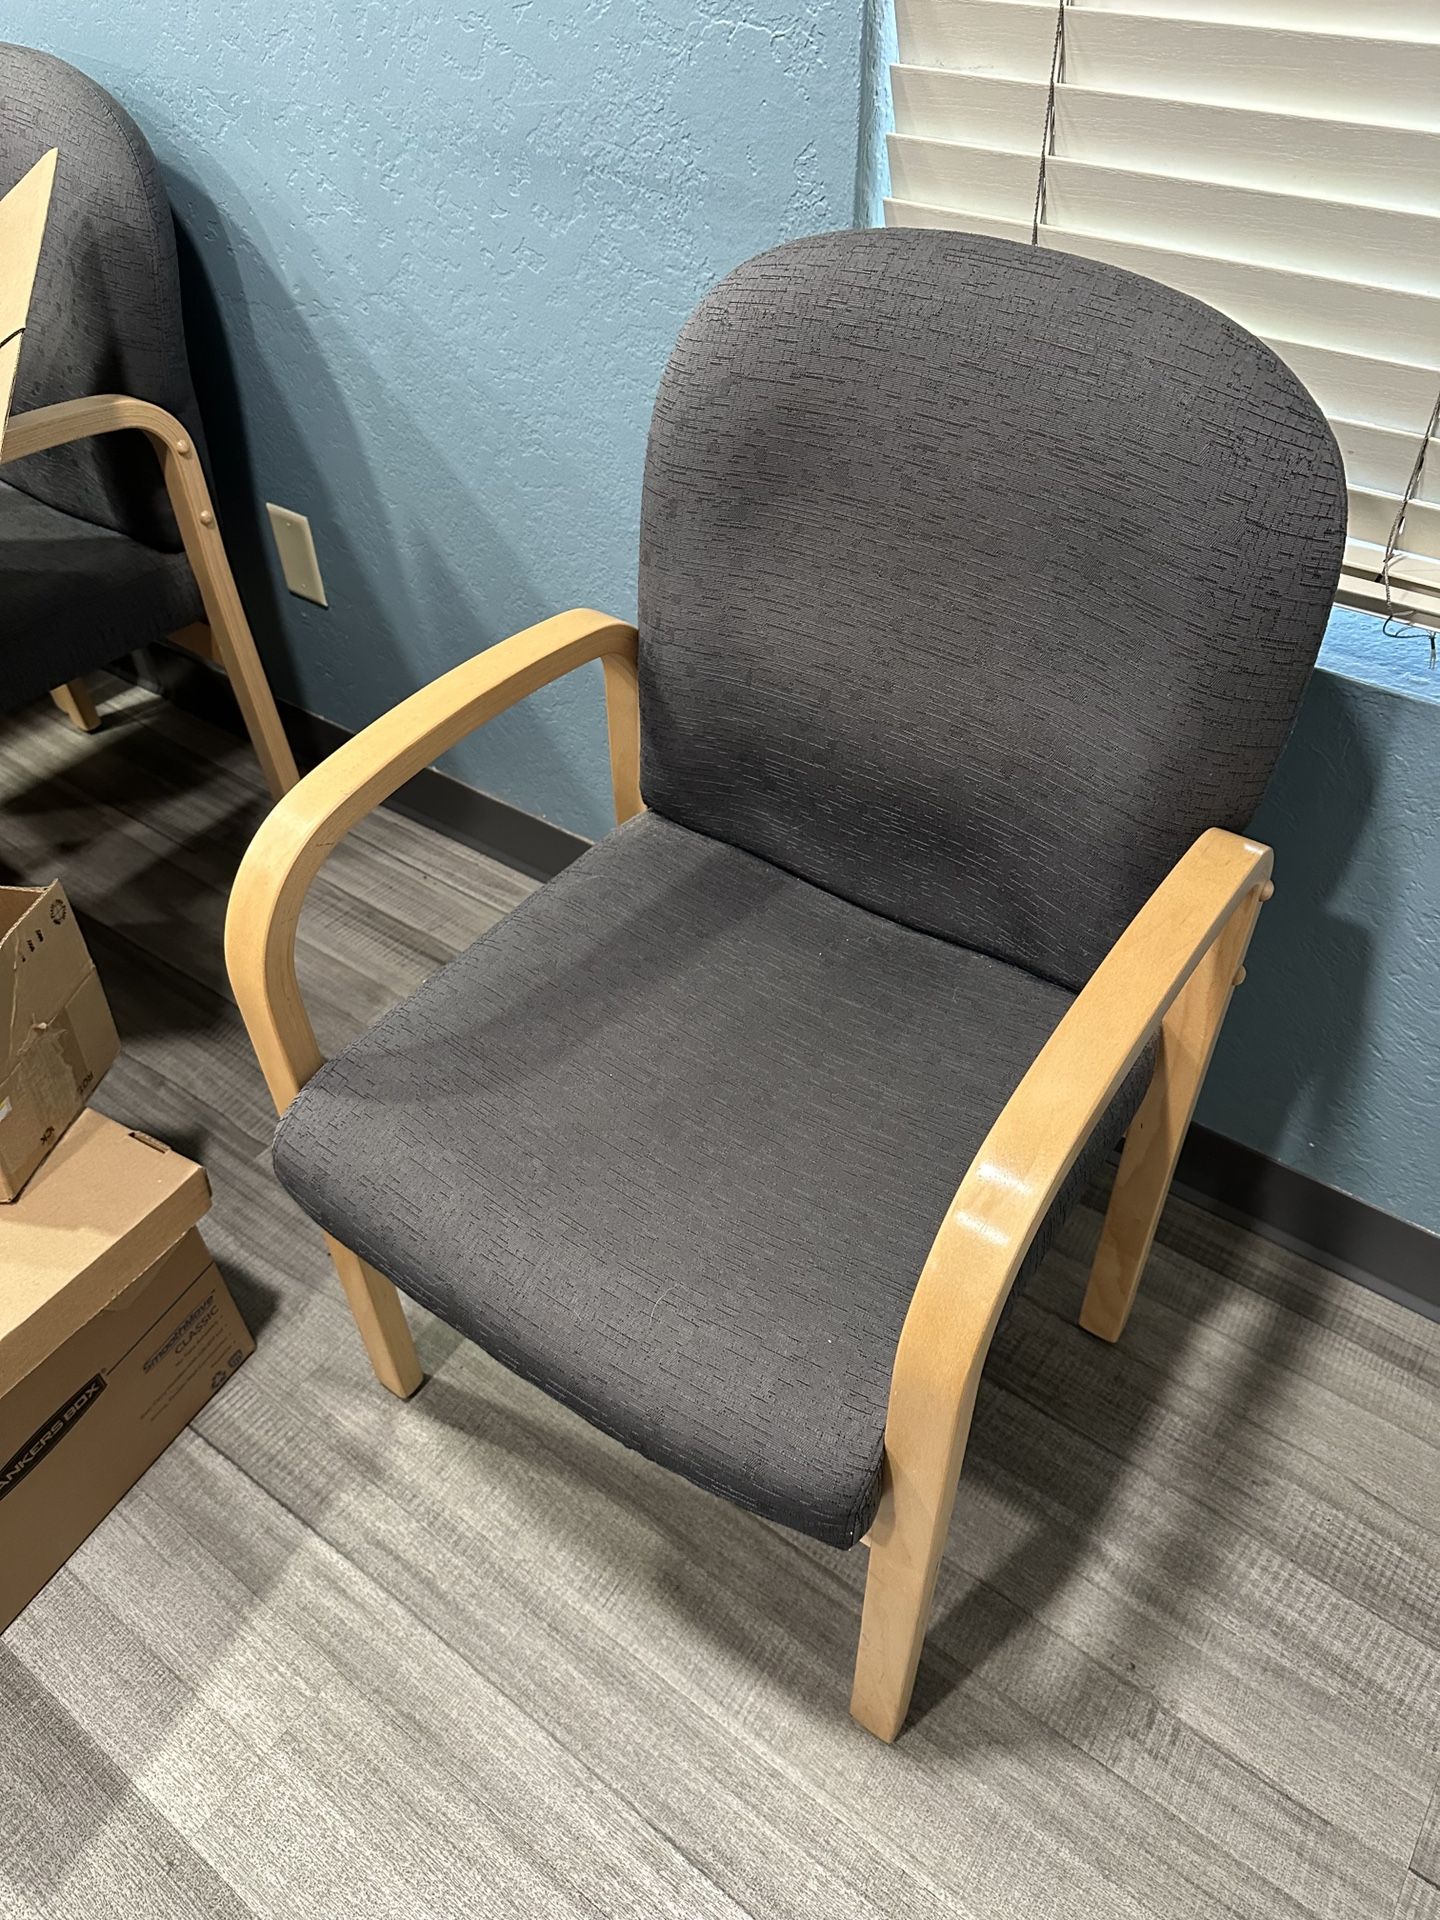 FREE Waiting Room Chairs 